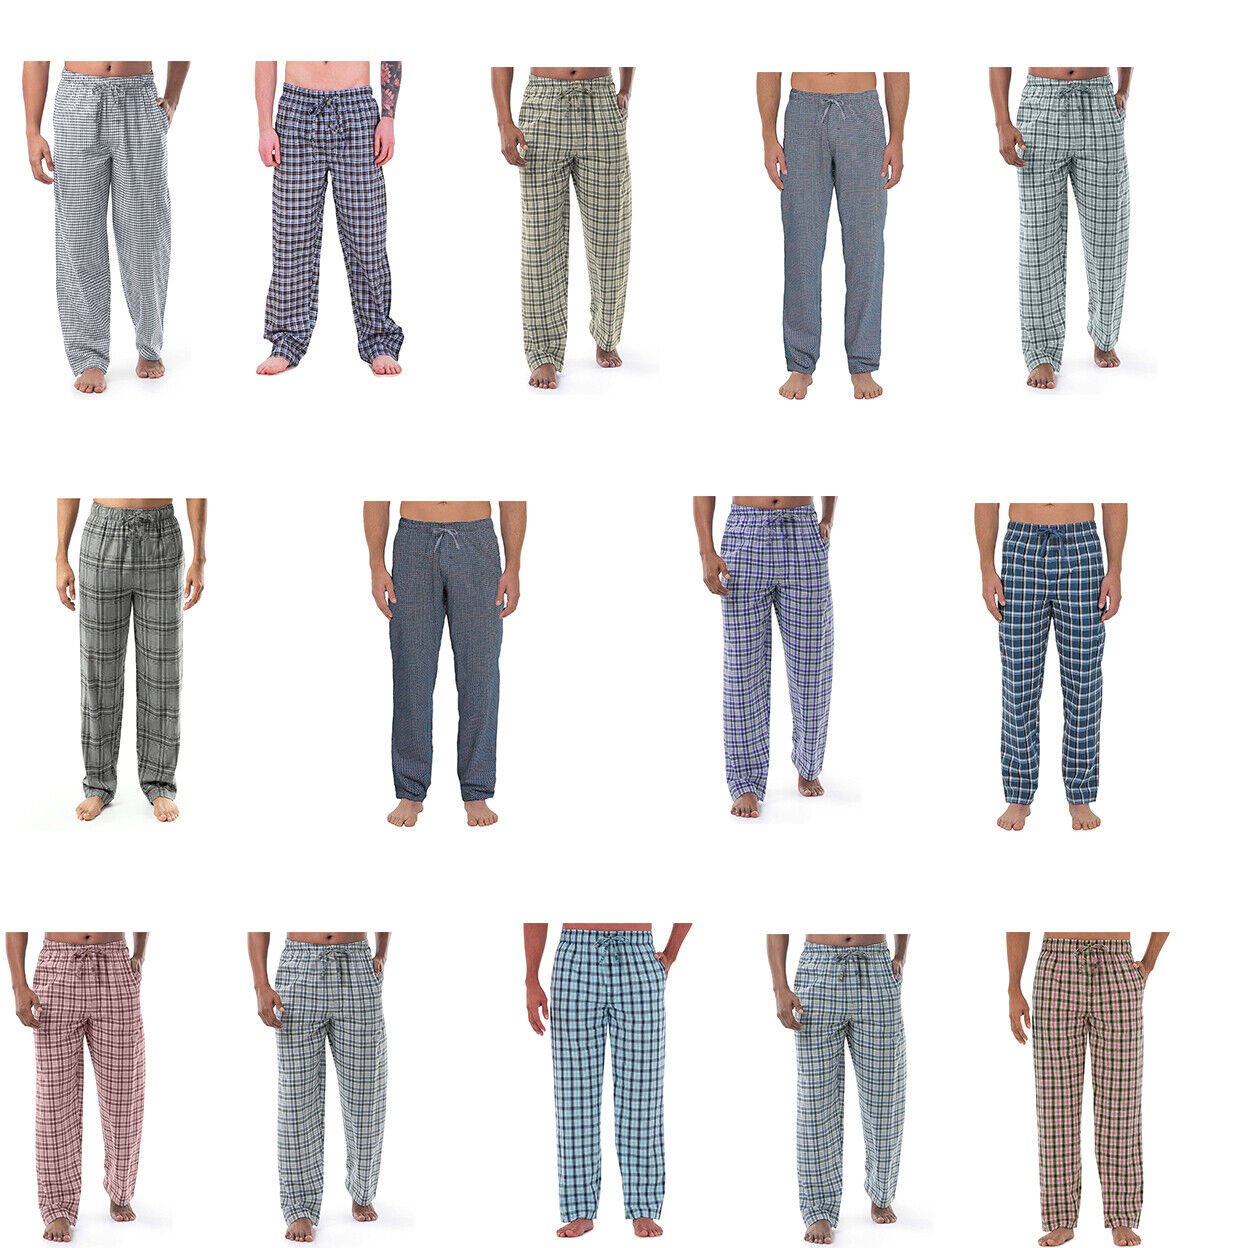 5-Pack: Men's Ultra-Soft Plaid Cotton Jersey Knit Comfy Sleep Lounge Pajama Pants - Xx-large